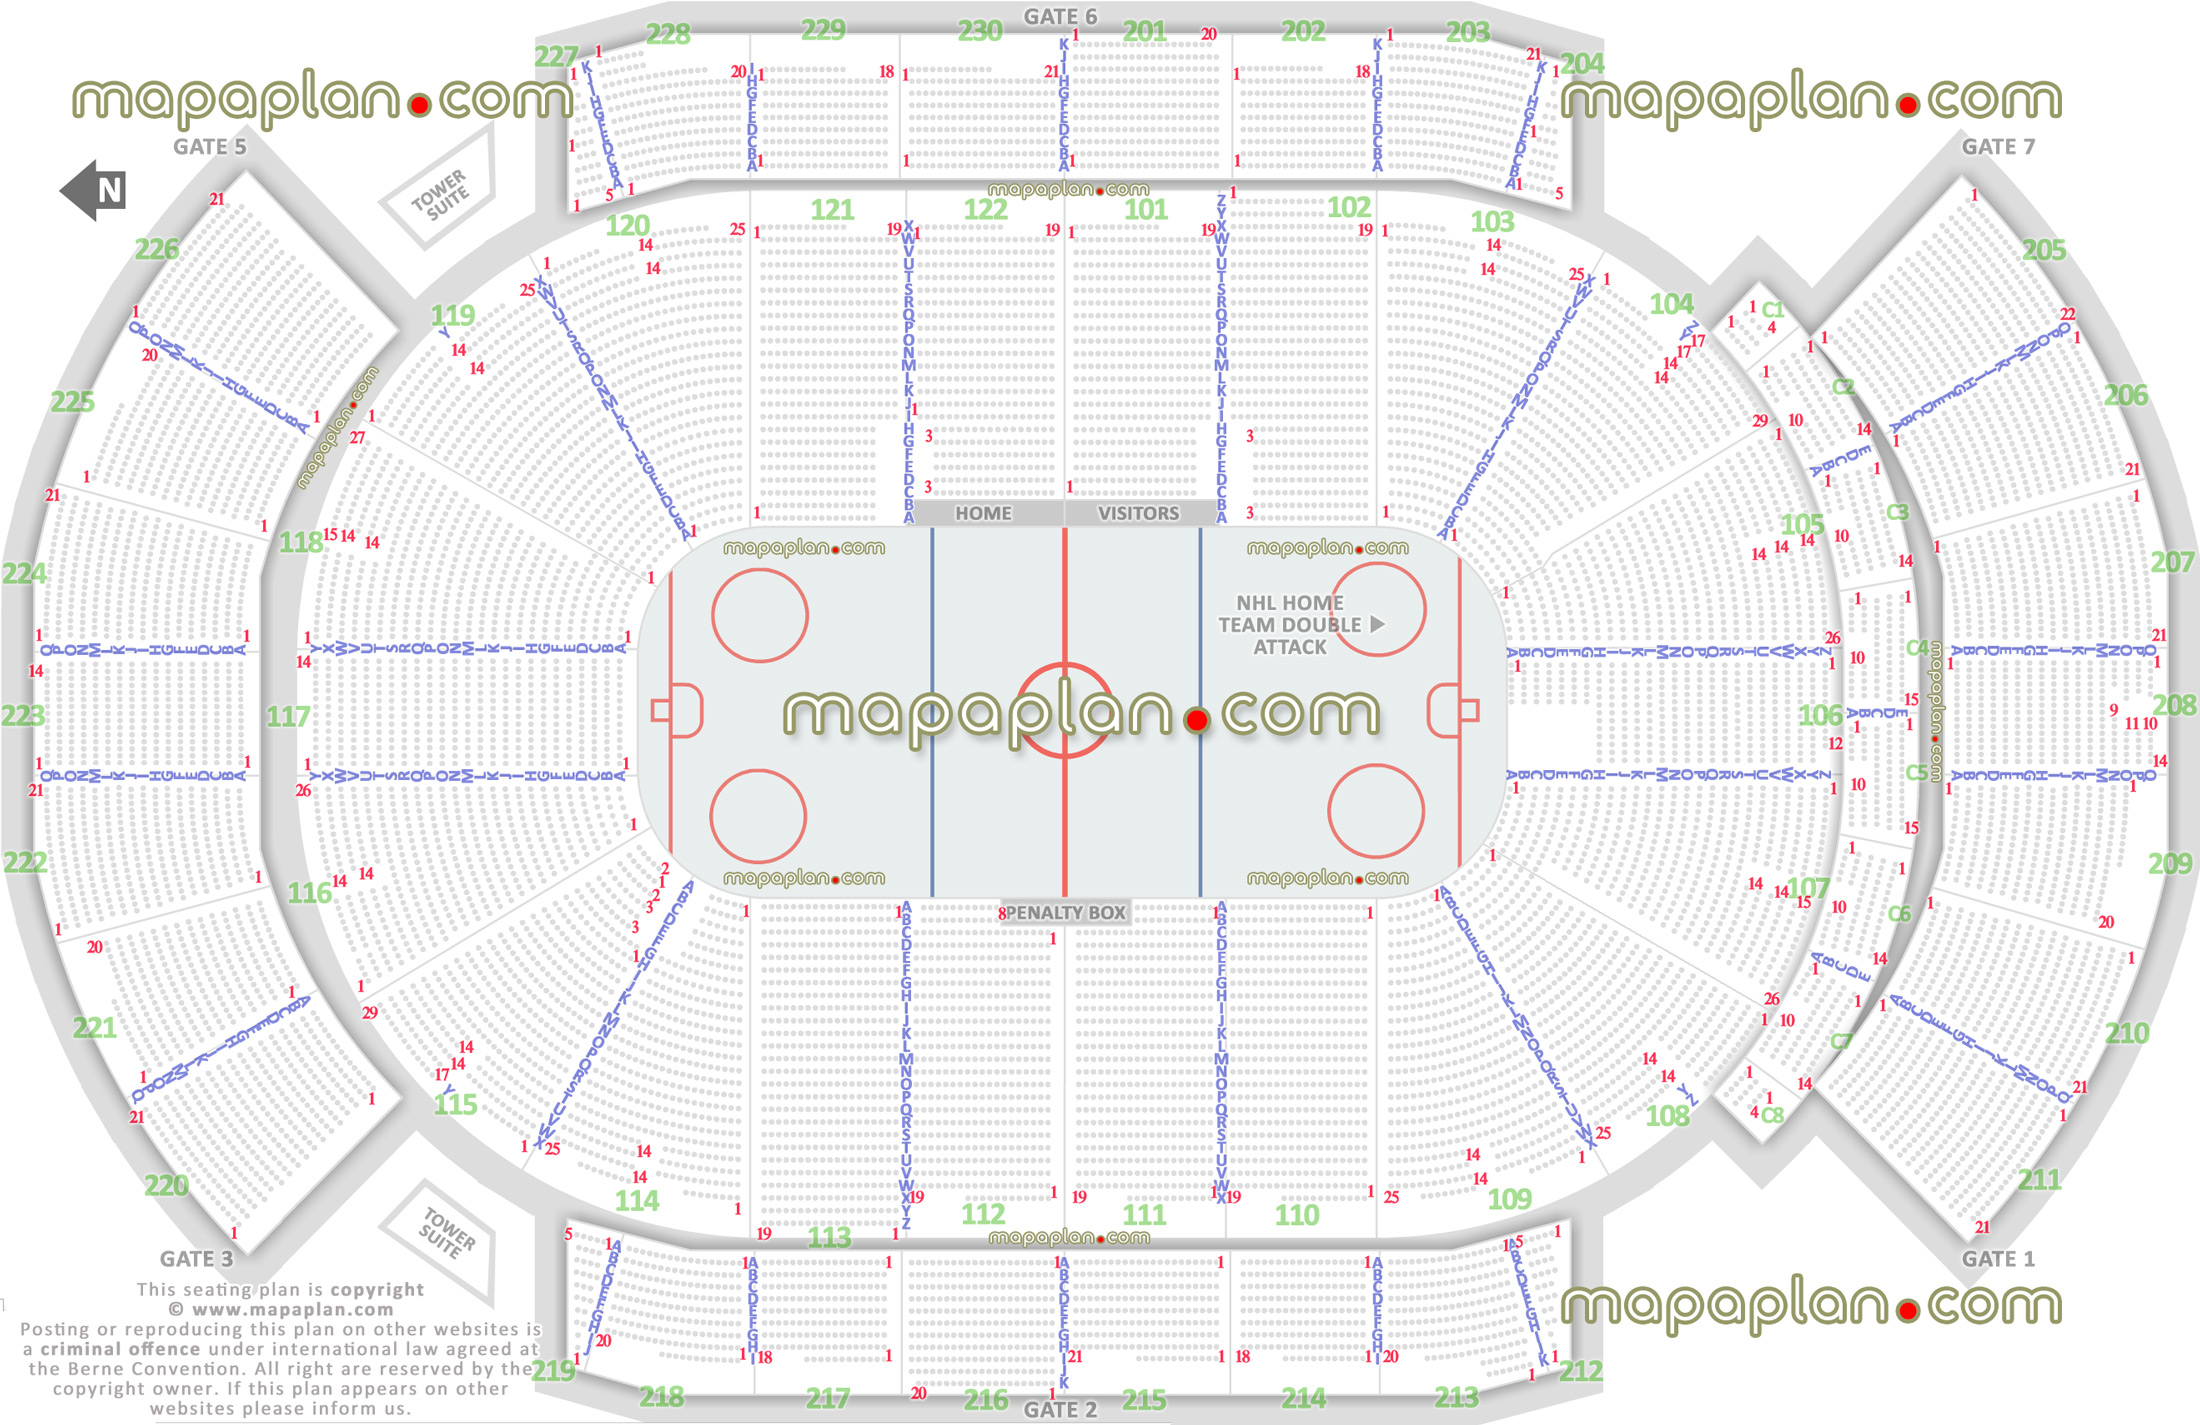 Gila River Arena Seating Chart Hockey